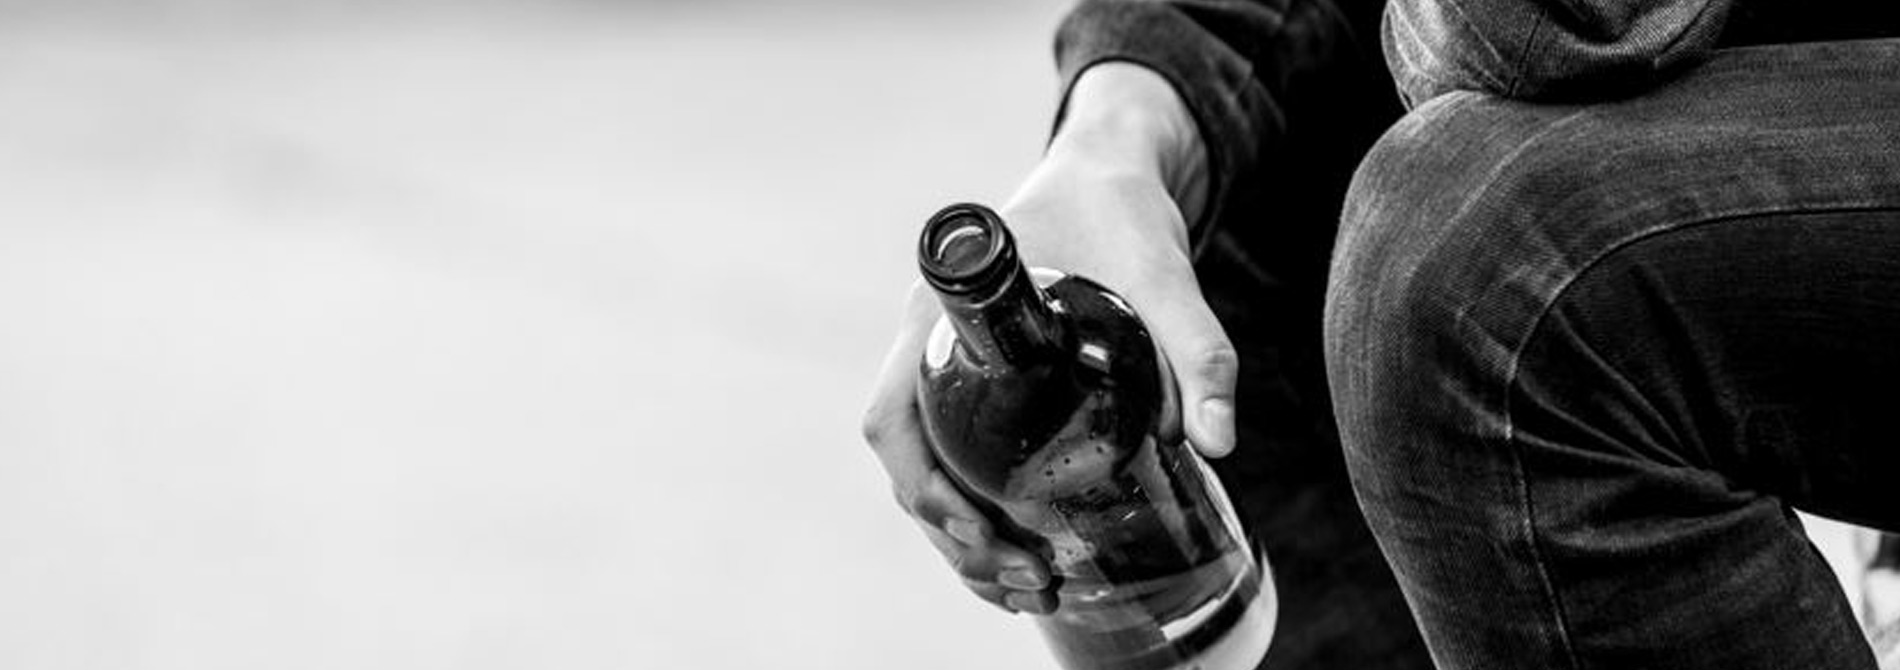 Man holding alcohol bottle